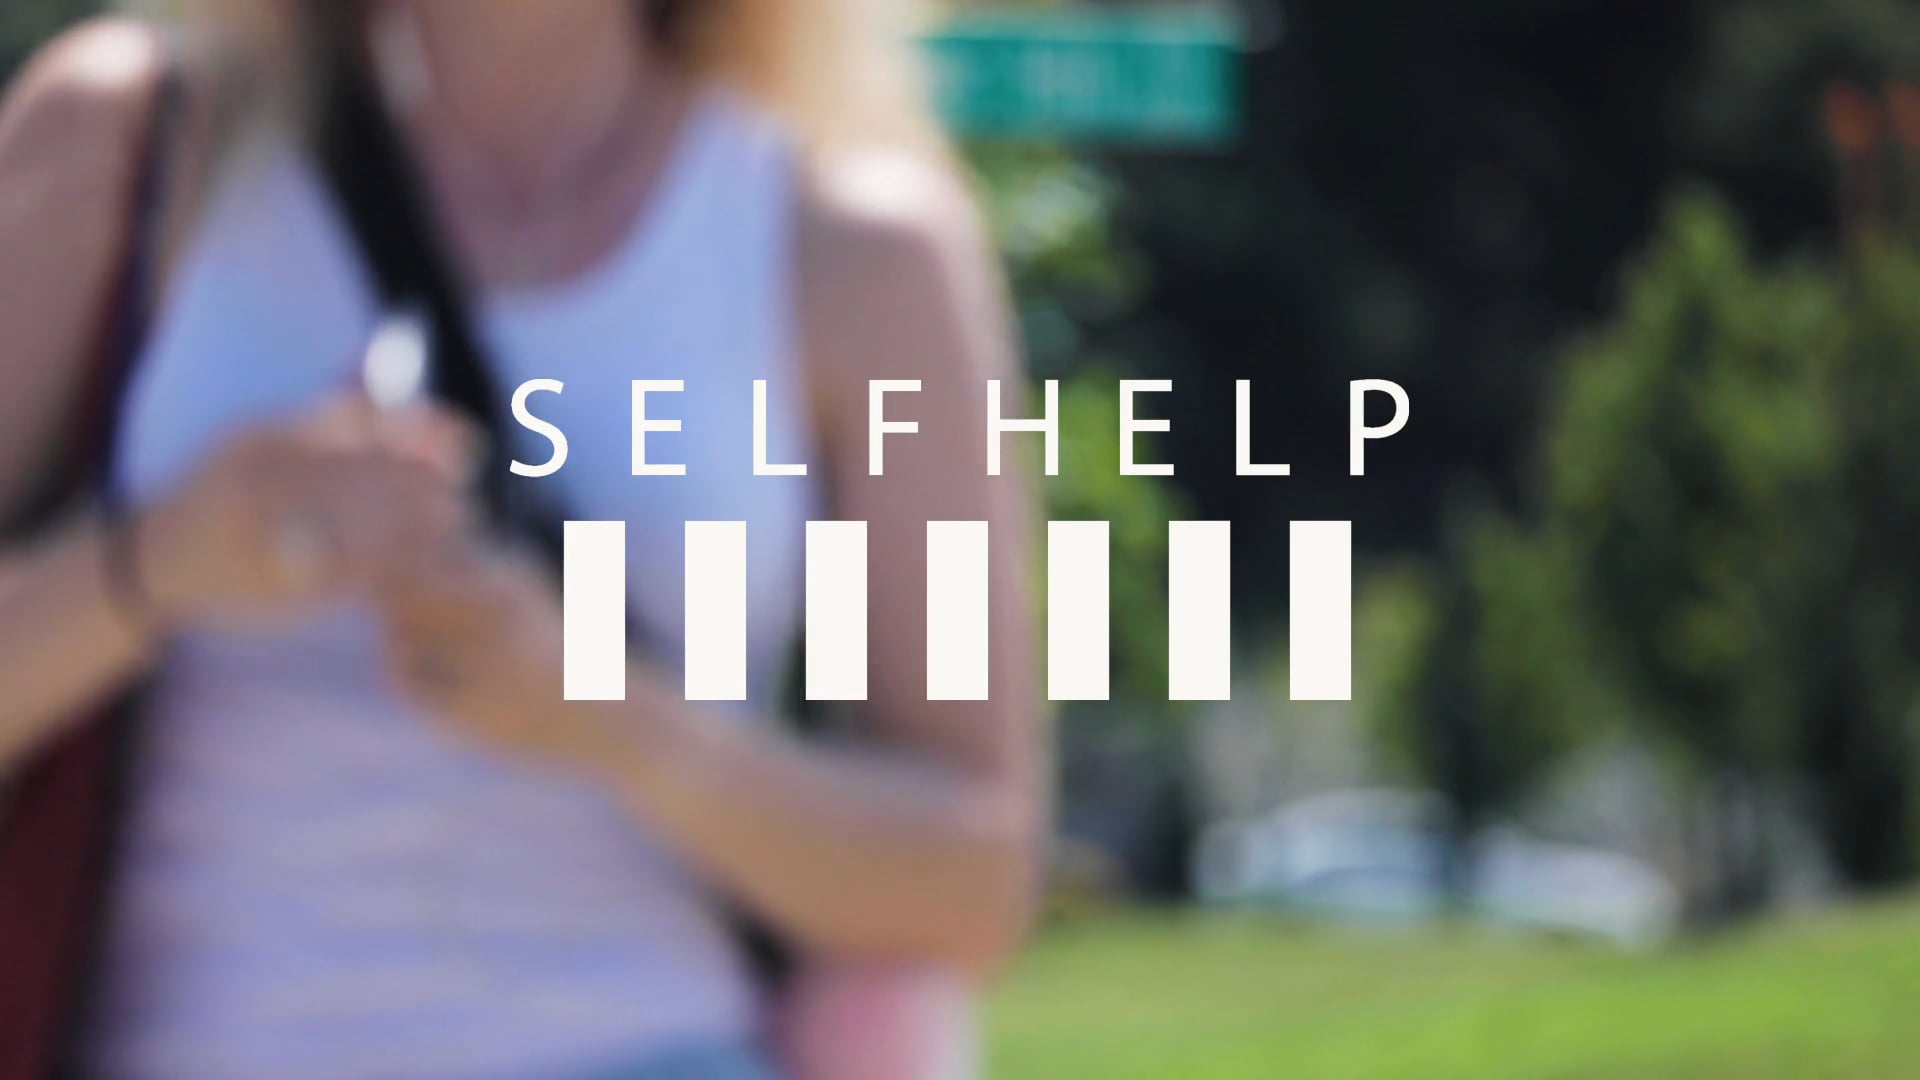 48HR Film Festival - "Self Help"